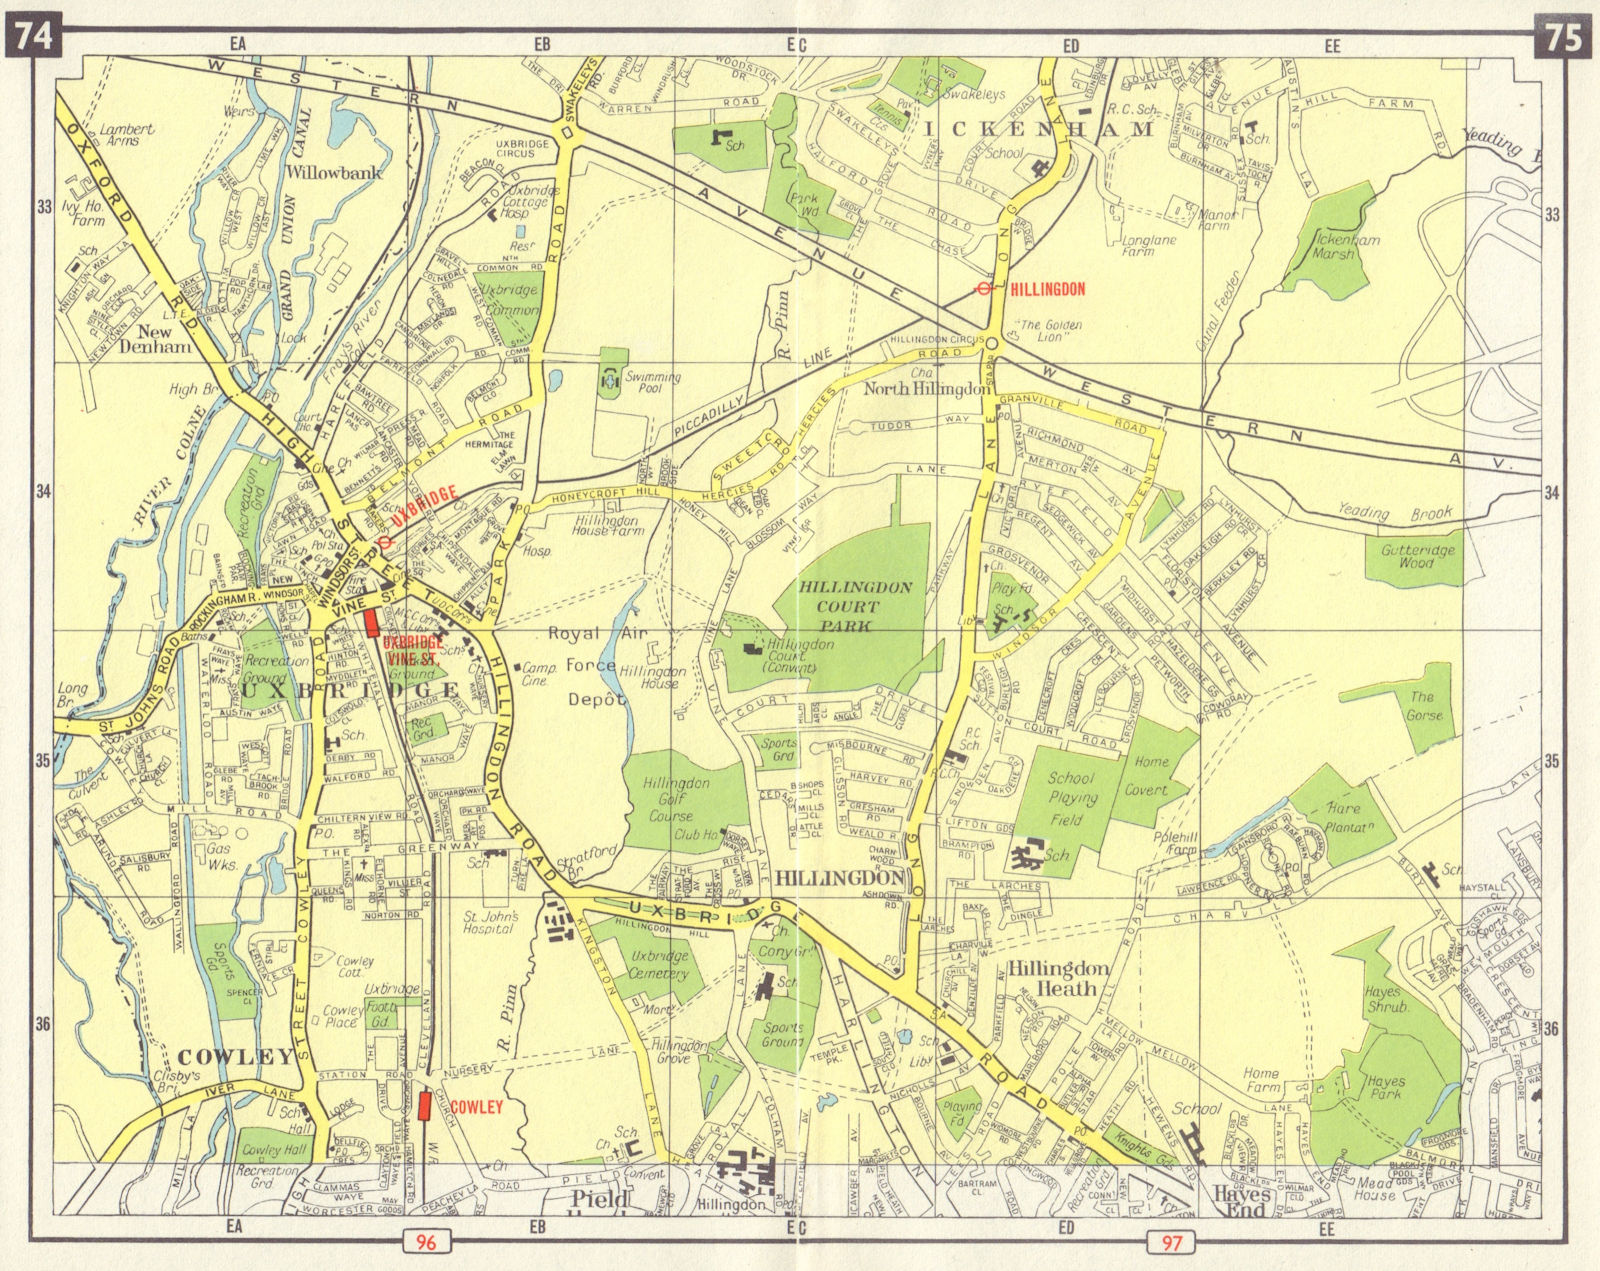 W LONDON Uxbridge Hillingdon Cowley Ickenham Hayes End Pied Heath 1965 old map